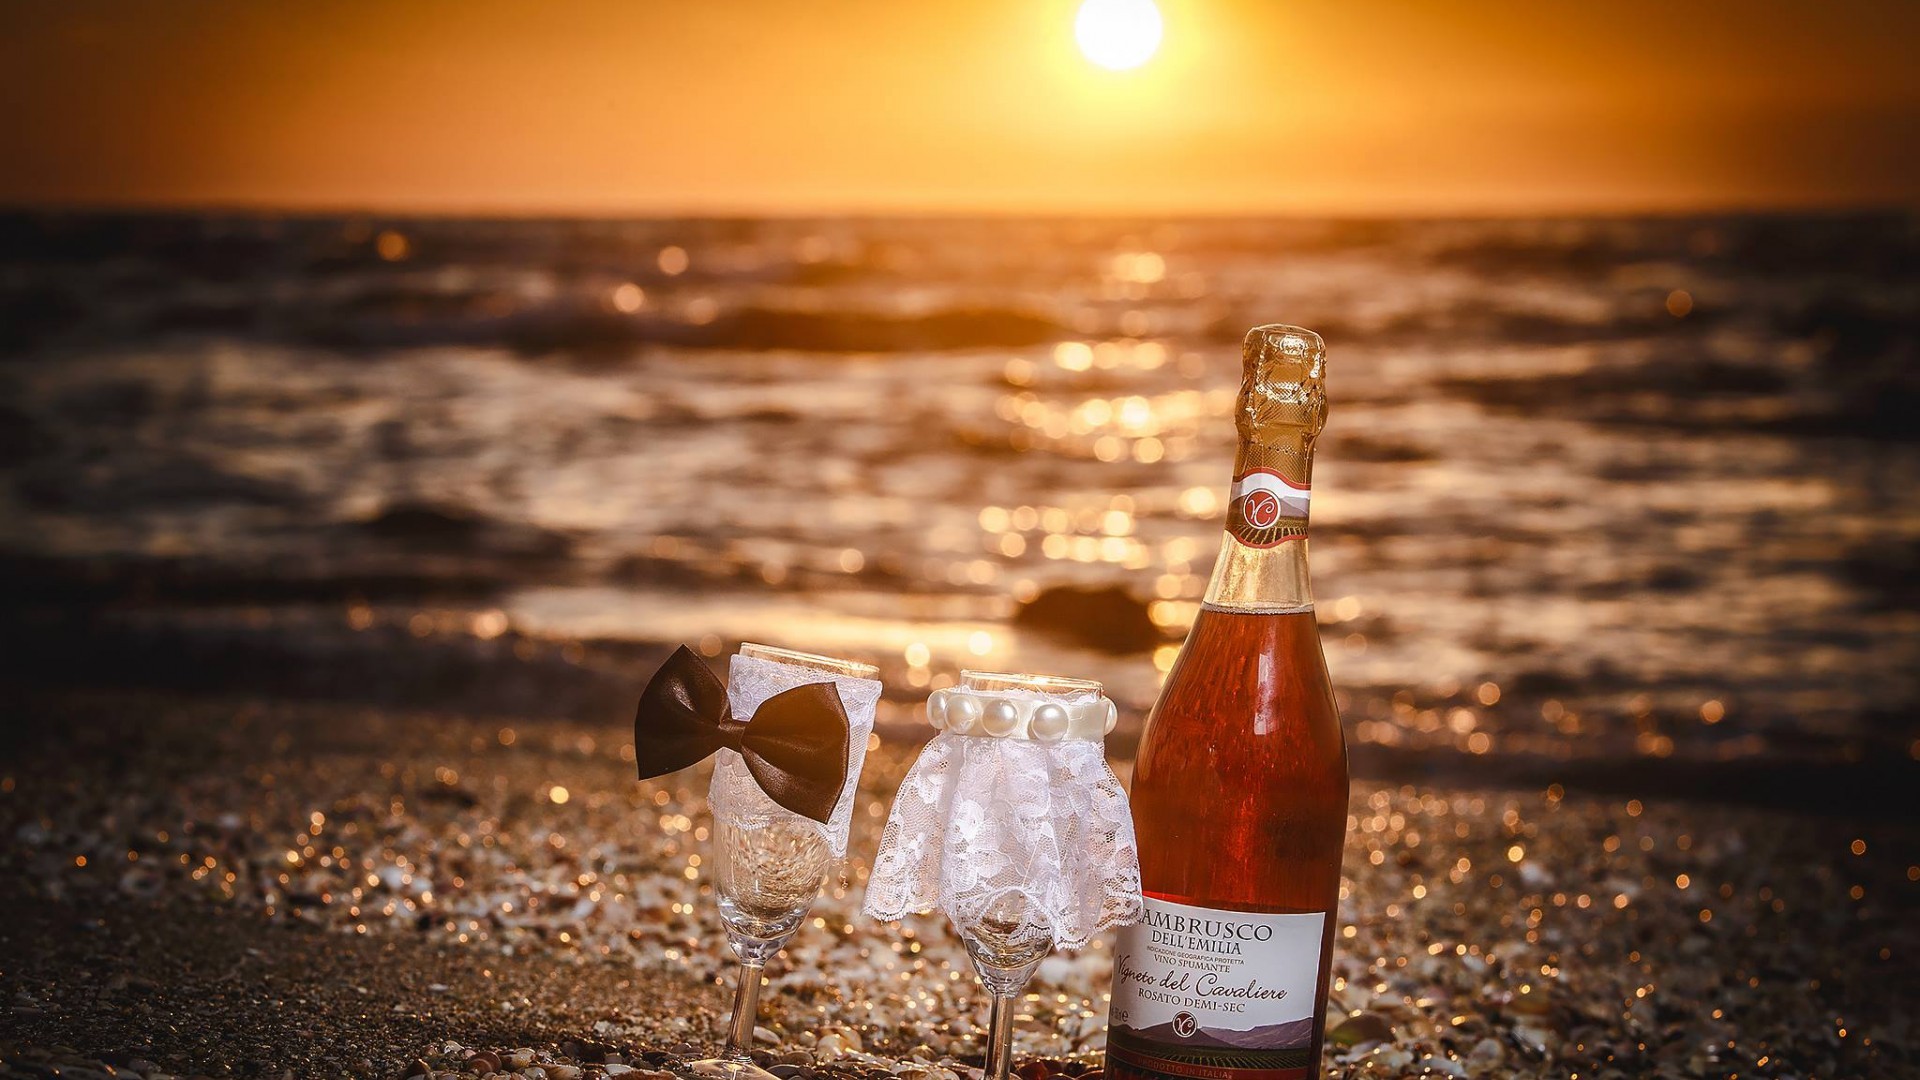 General 1920x1080 wine drink sea bow tie beach sunset